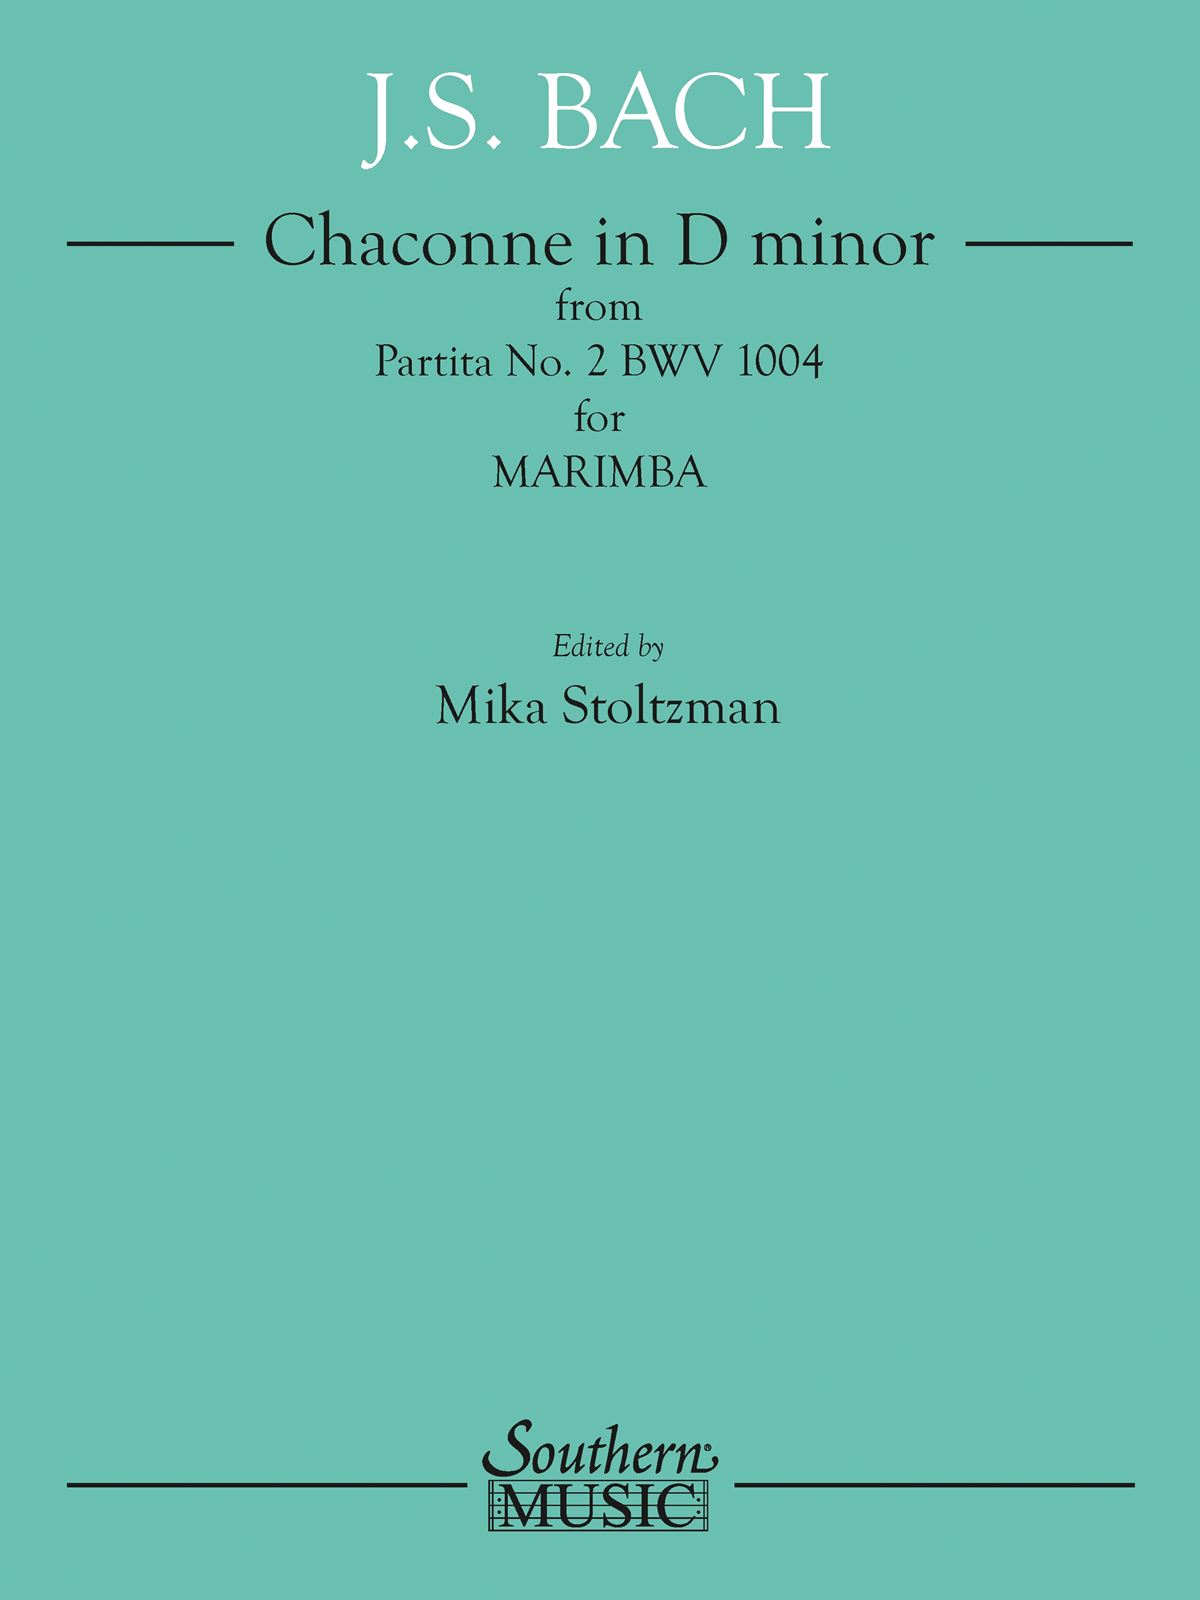 Johann Sebastian Bach: Chaconne in D minor from Partita No. 2 BWV 1004: Marimba: